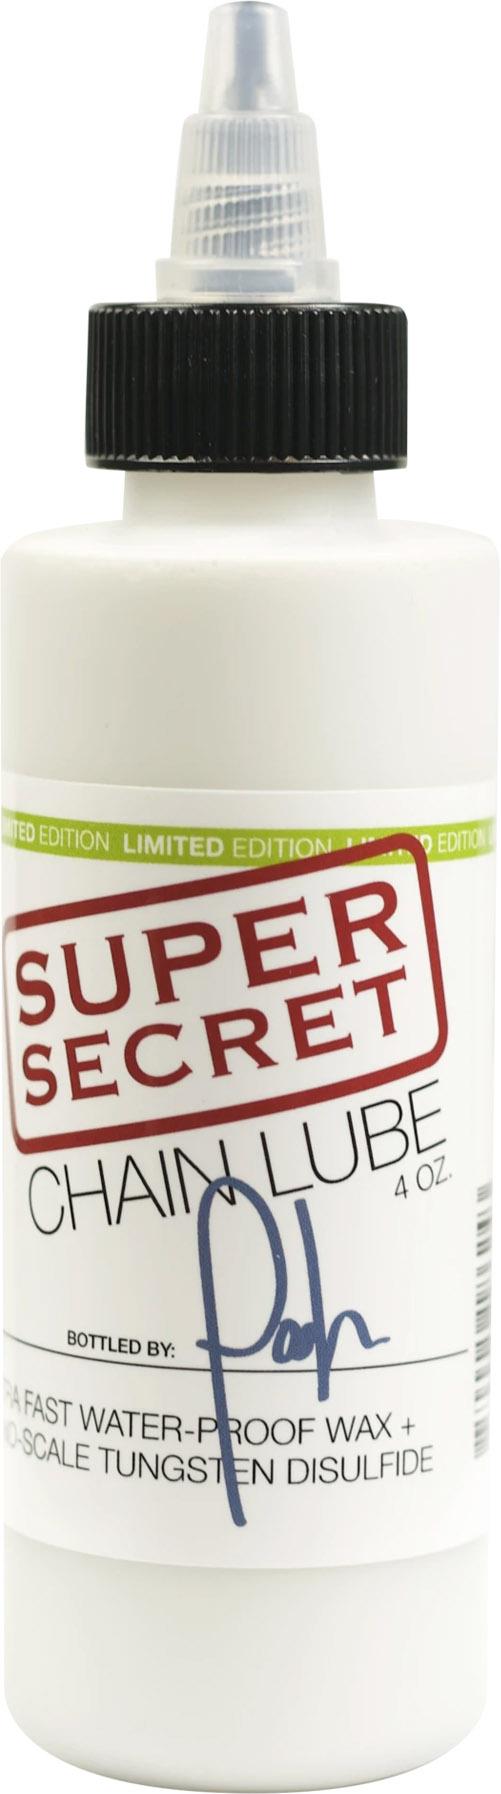 Silca Super Secret Chain Lube - 4oz Bottle - Neutral